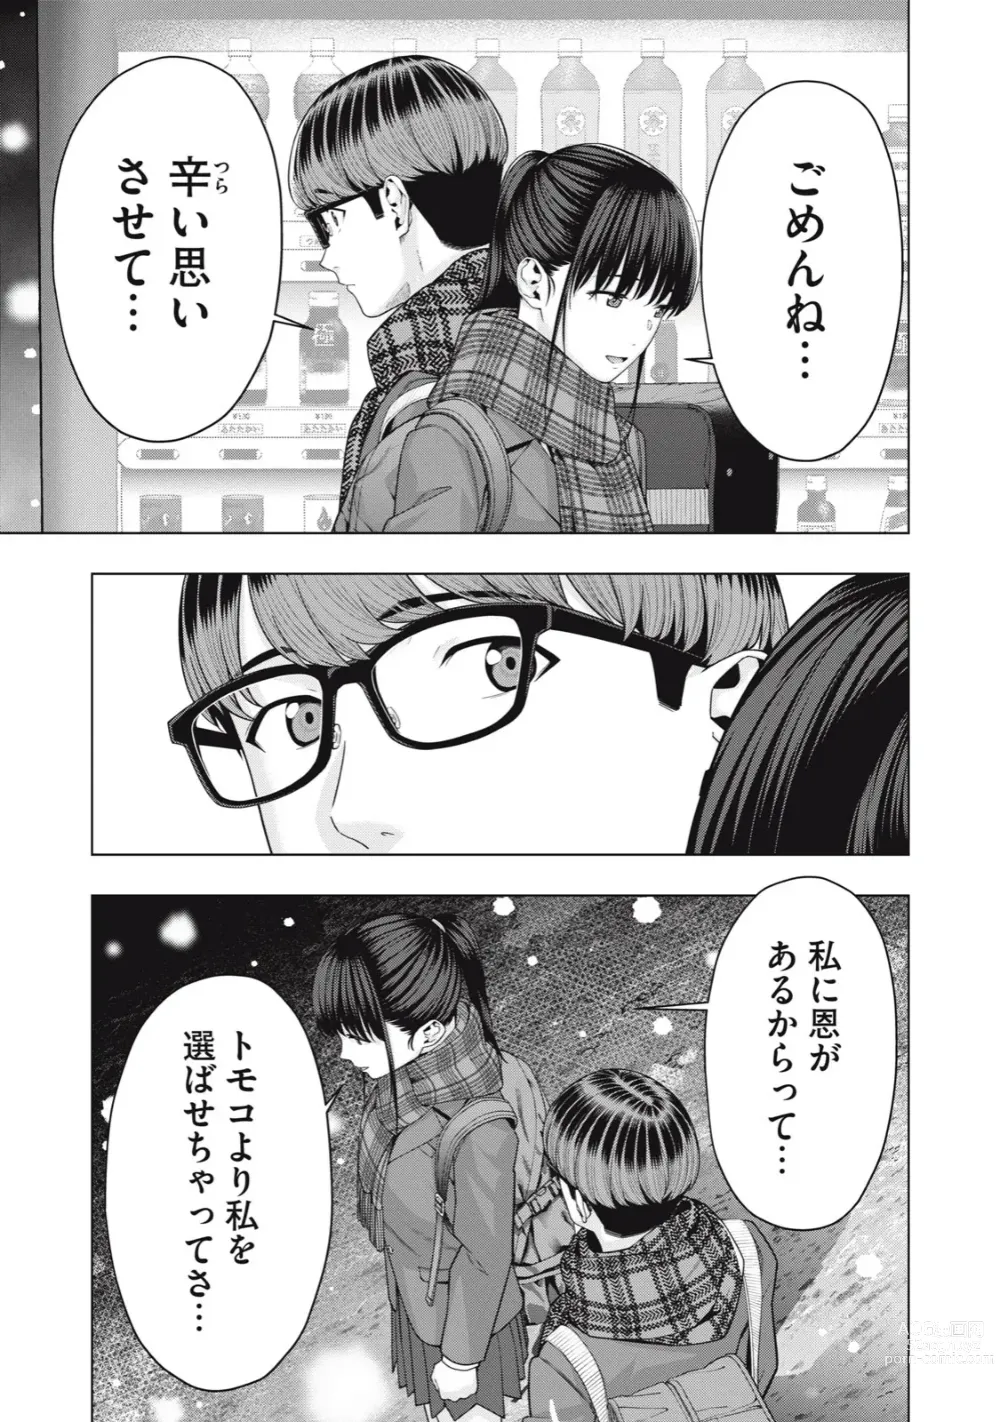 Page 581 of manga Kanojo no Tomodachi